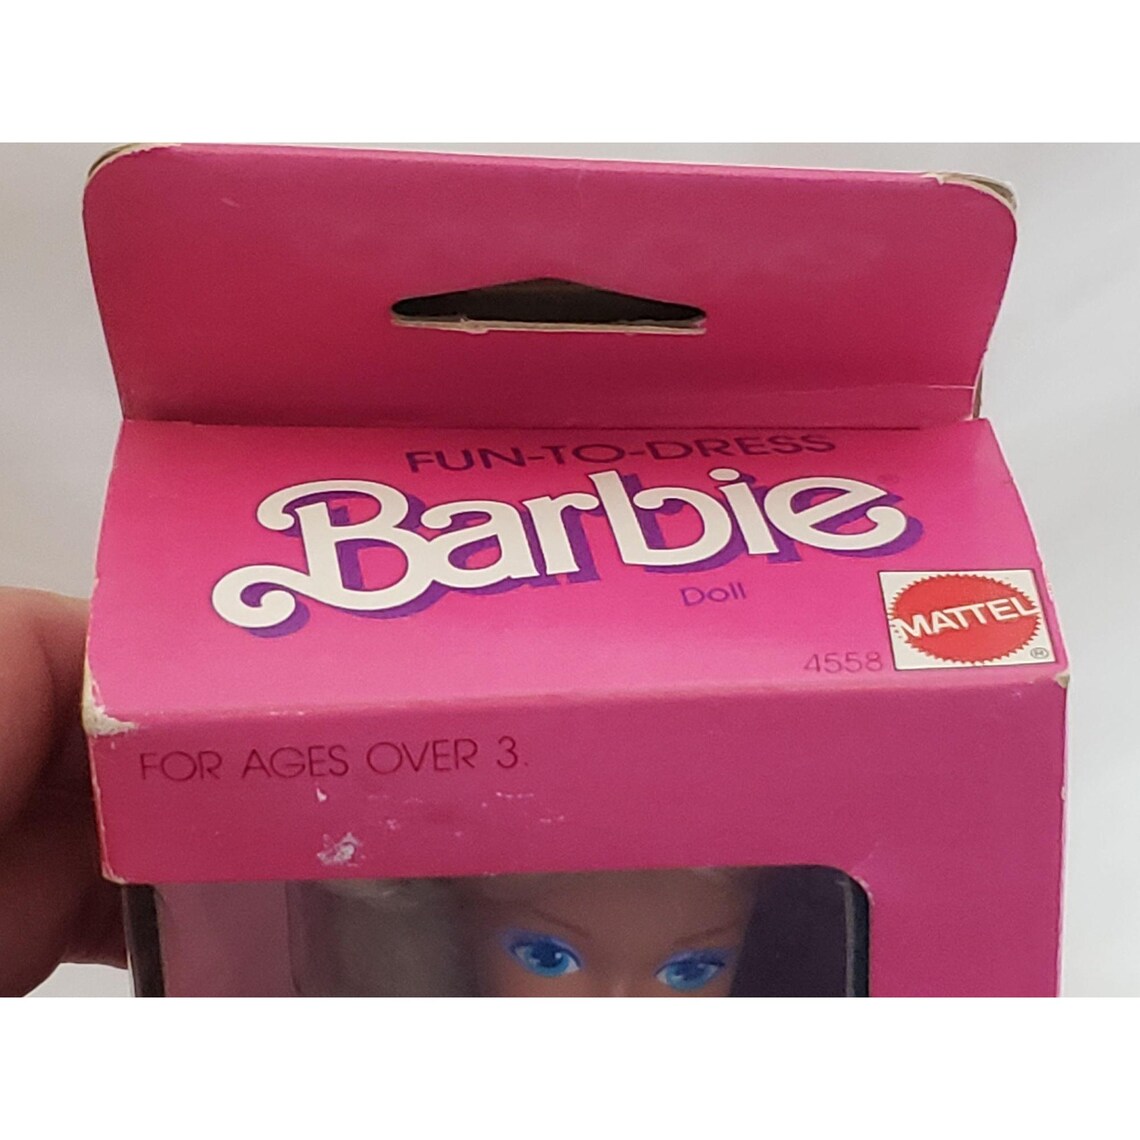 1987 Fun to Dress Barbie 4558 Original Box Shows Wear Vintage | Etsy